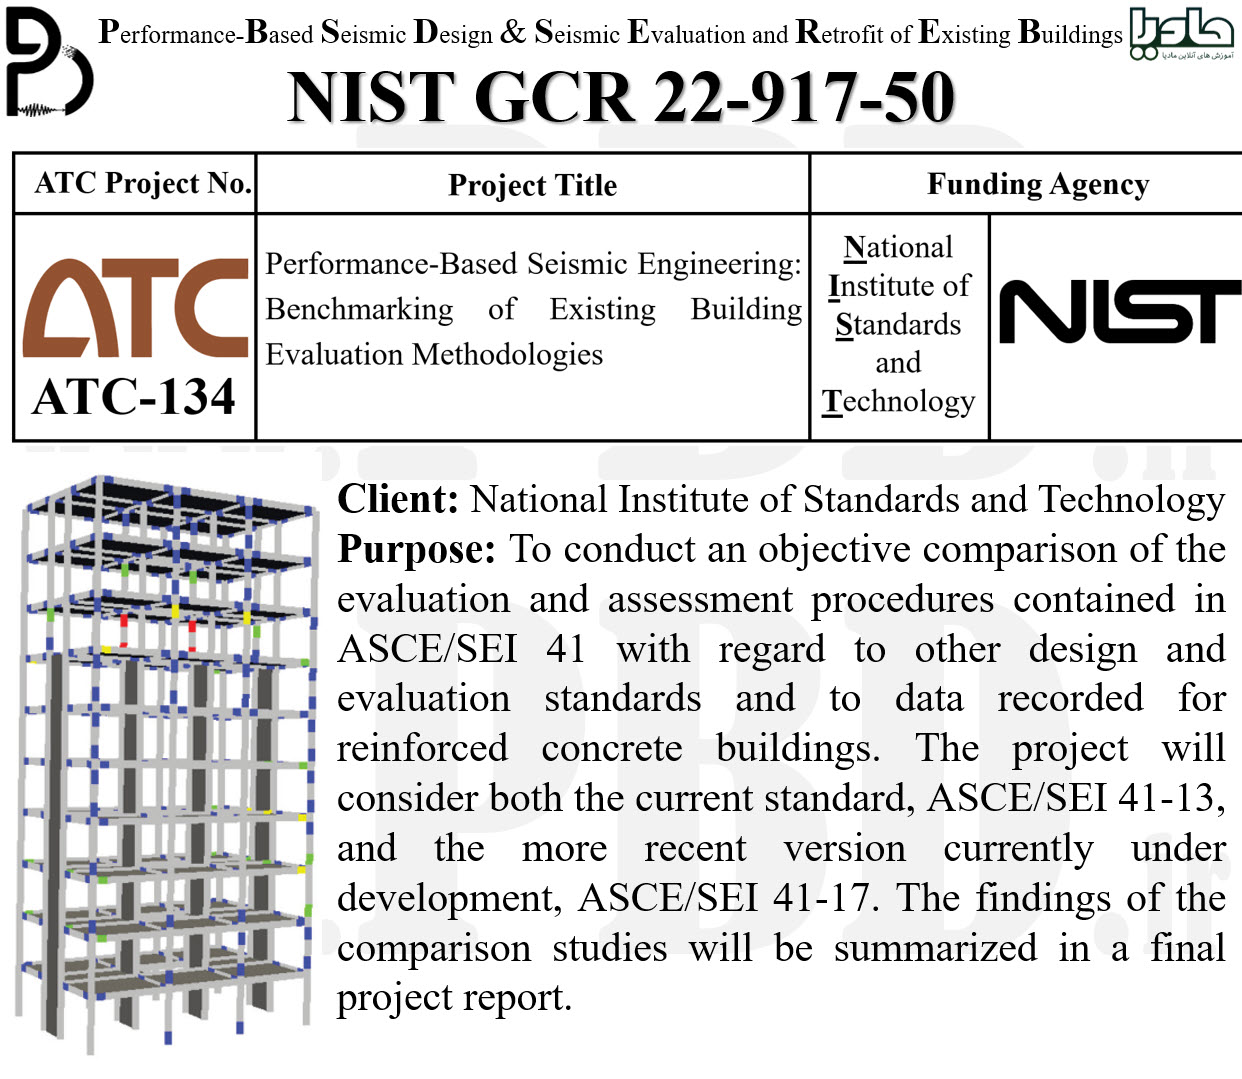 NIST GCR 22-917-50